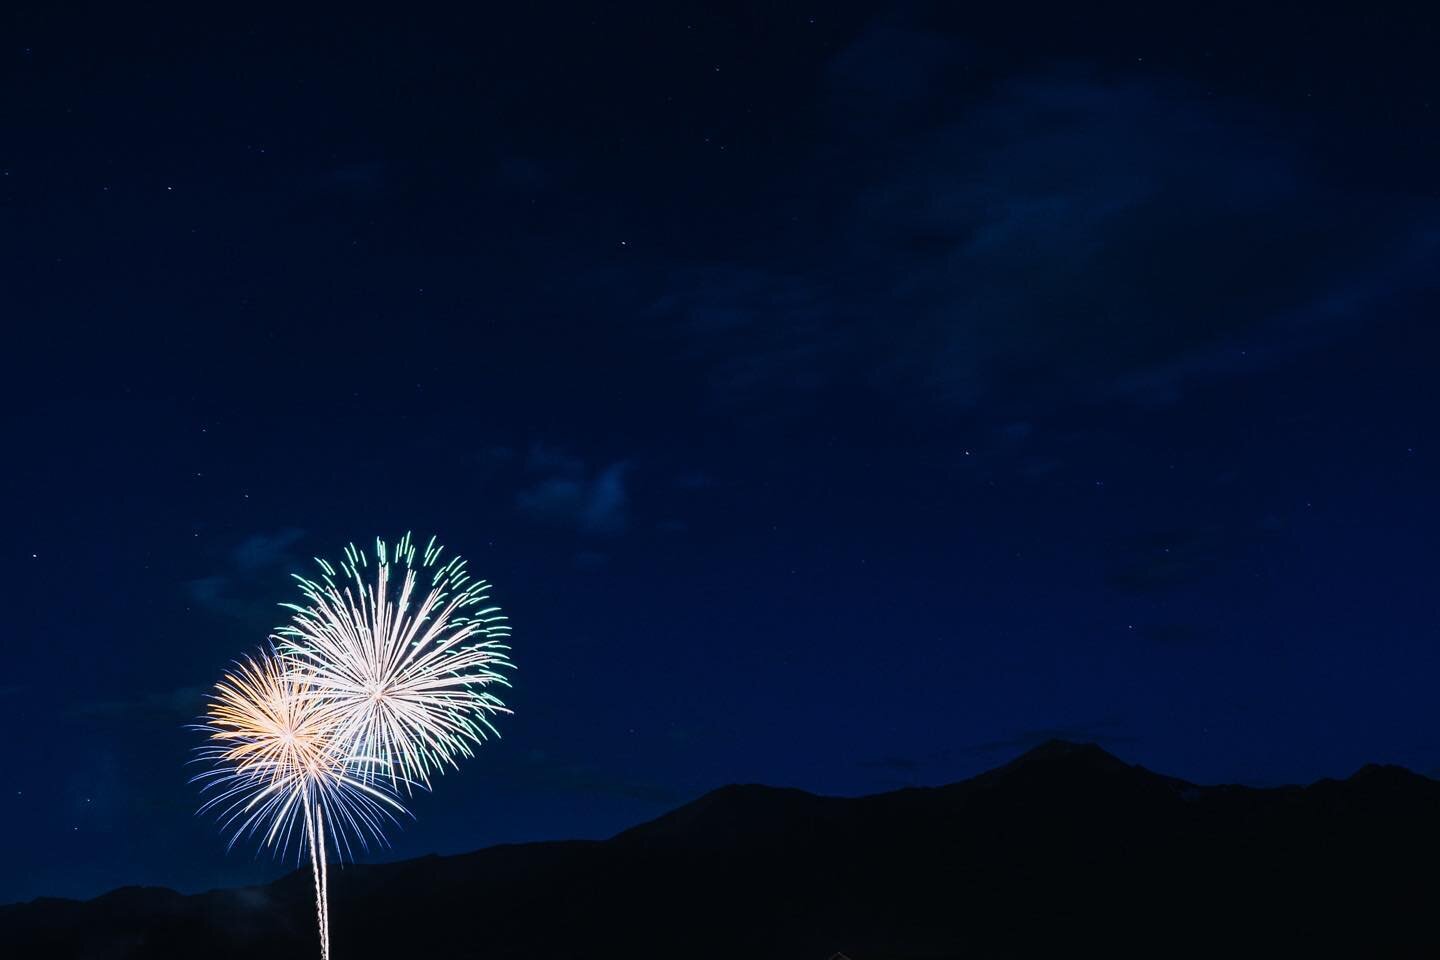 Happy Independence Day!
.
.
.
.
www.ajstegall.com
#ajstegallphotography #4thofjuly #okc #oklahoma #instagay #lgbtq #gaytographer #fireworks #mountains